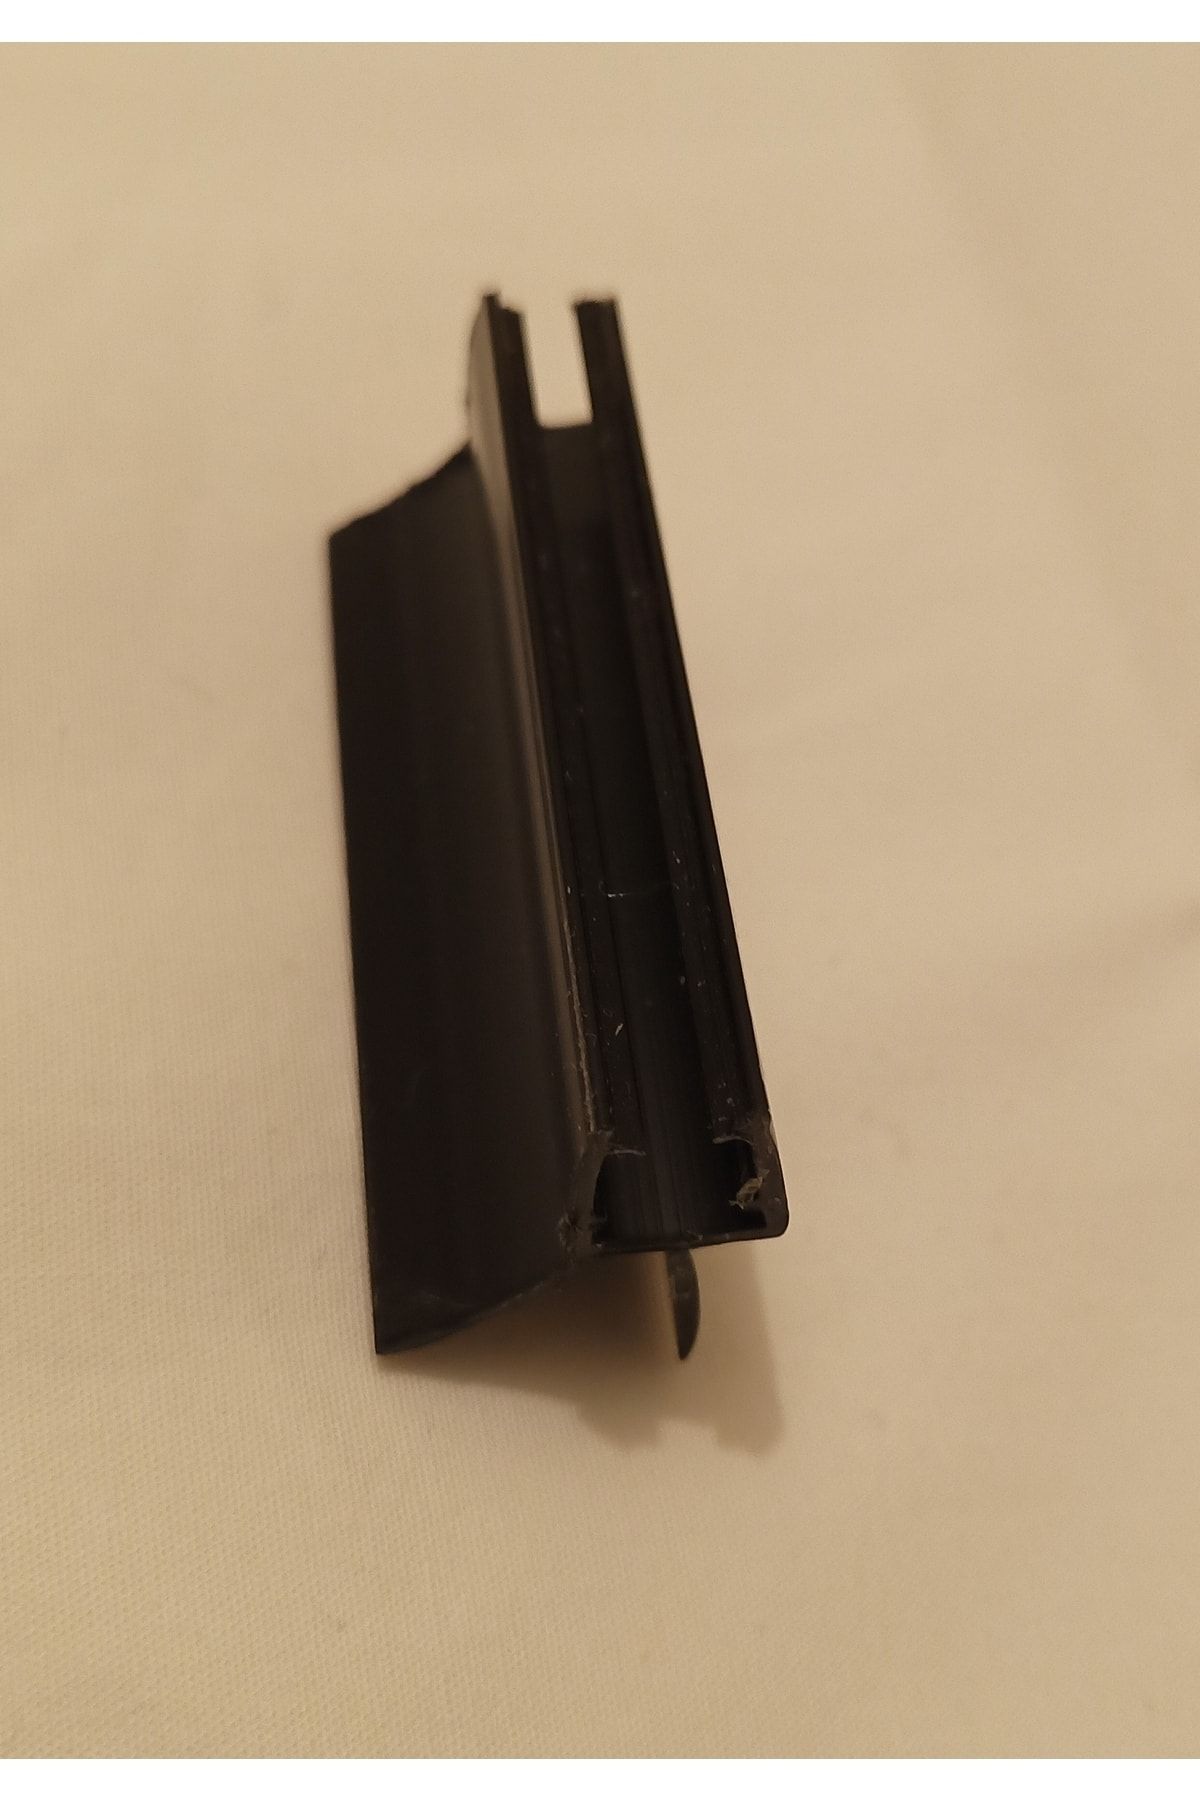 OBERS Siyah Menteşeli Duşakabin Kapı Alt Fitili 200cm. 4-5-6mm